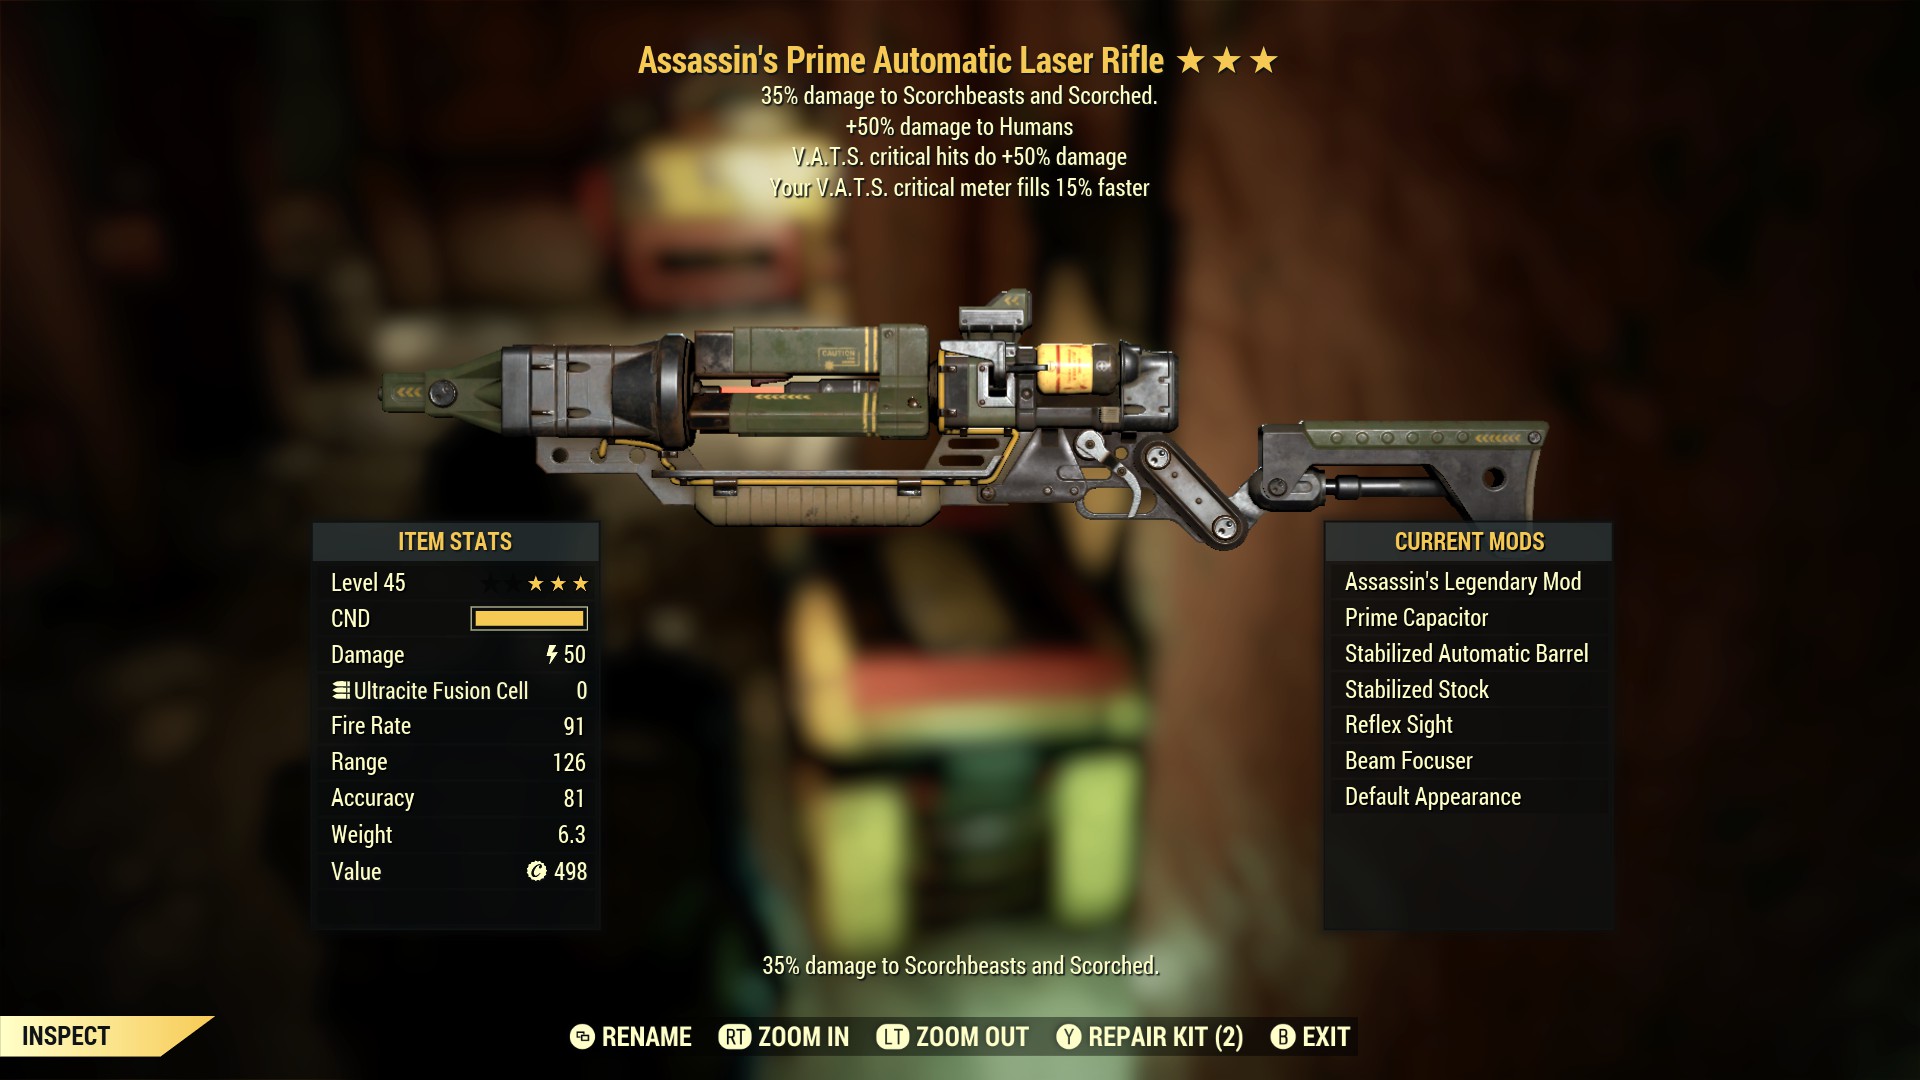 Assassin's Prime Automatic Laser Rifle